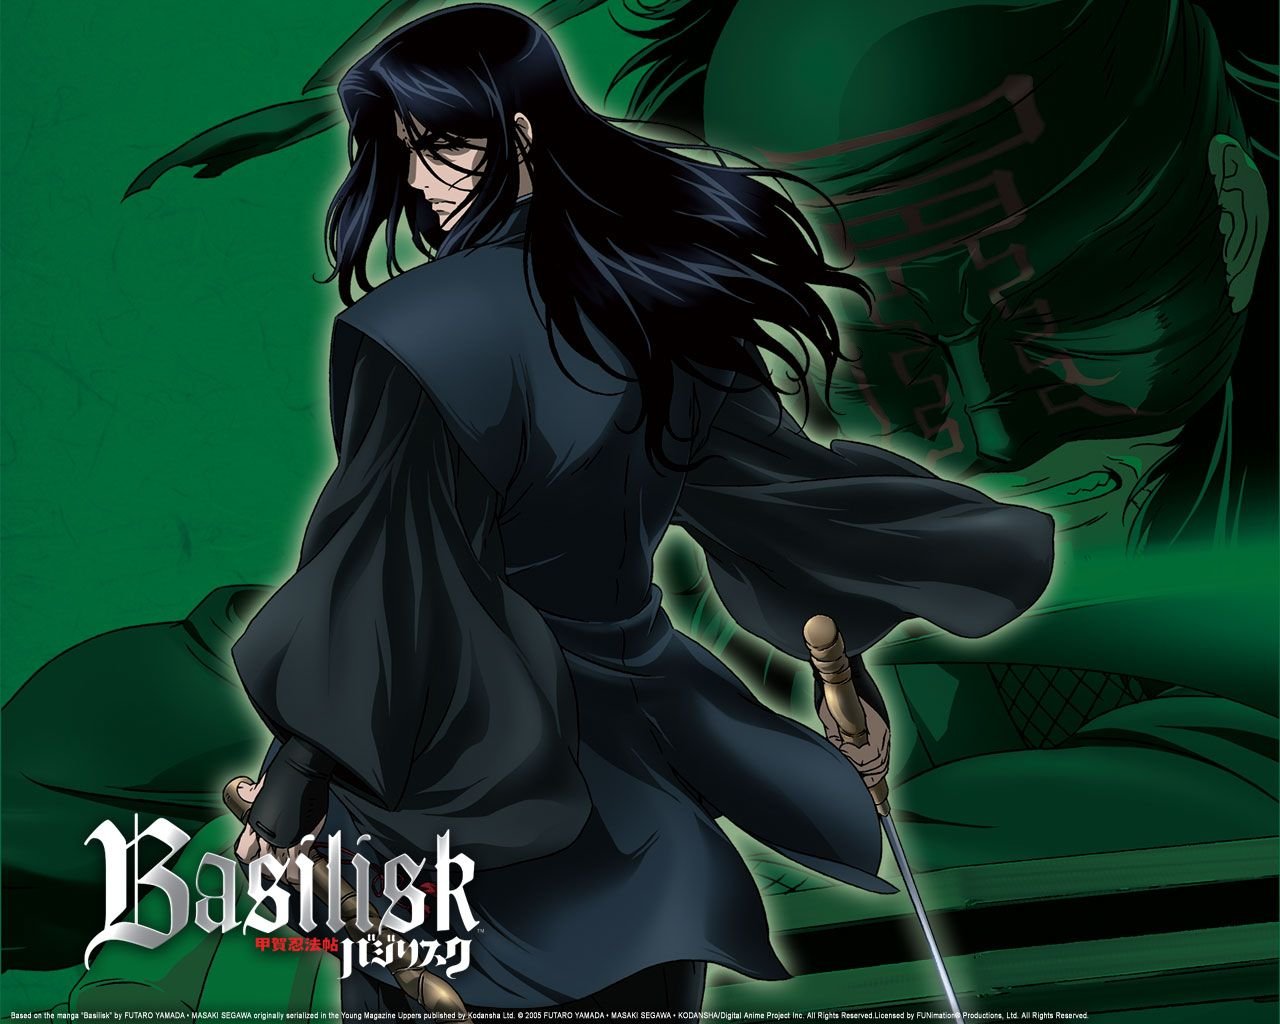 Basilisk - Vol. 1: Scrolls of Blood (DVD, 2006) Anime 704400085024 | eBay-demhanvico.com.vn